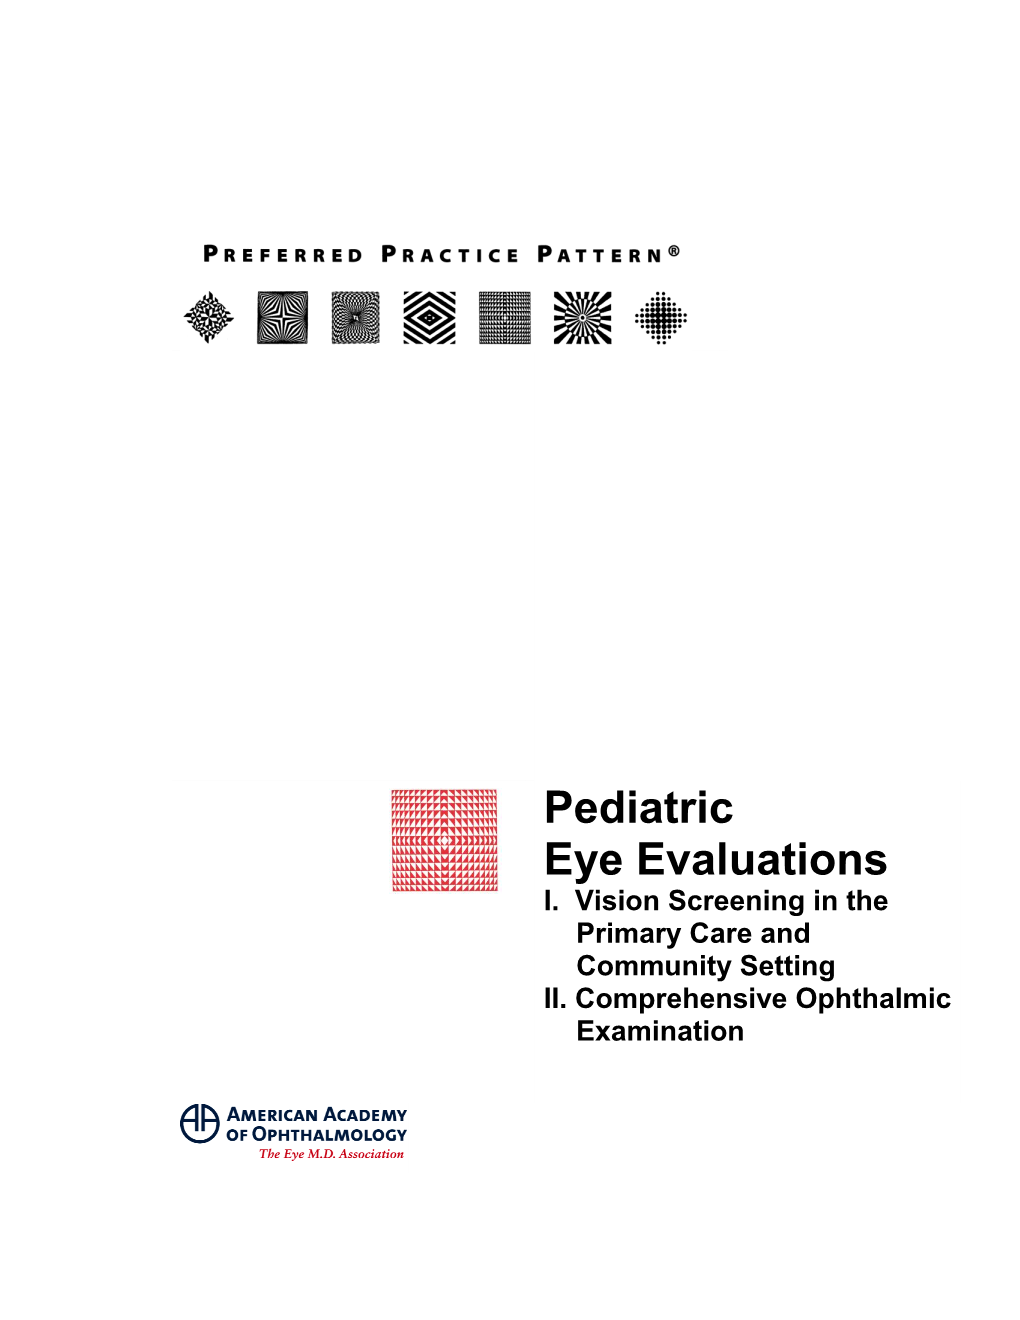 Pediatric Eye Evaluations PPP (1).Pdf